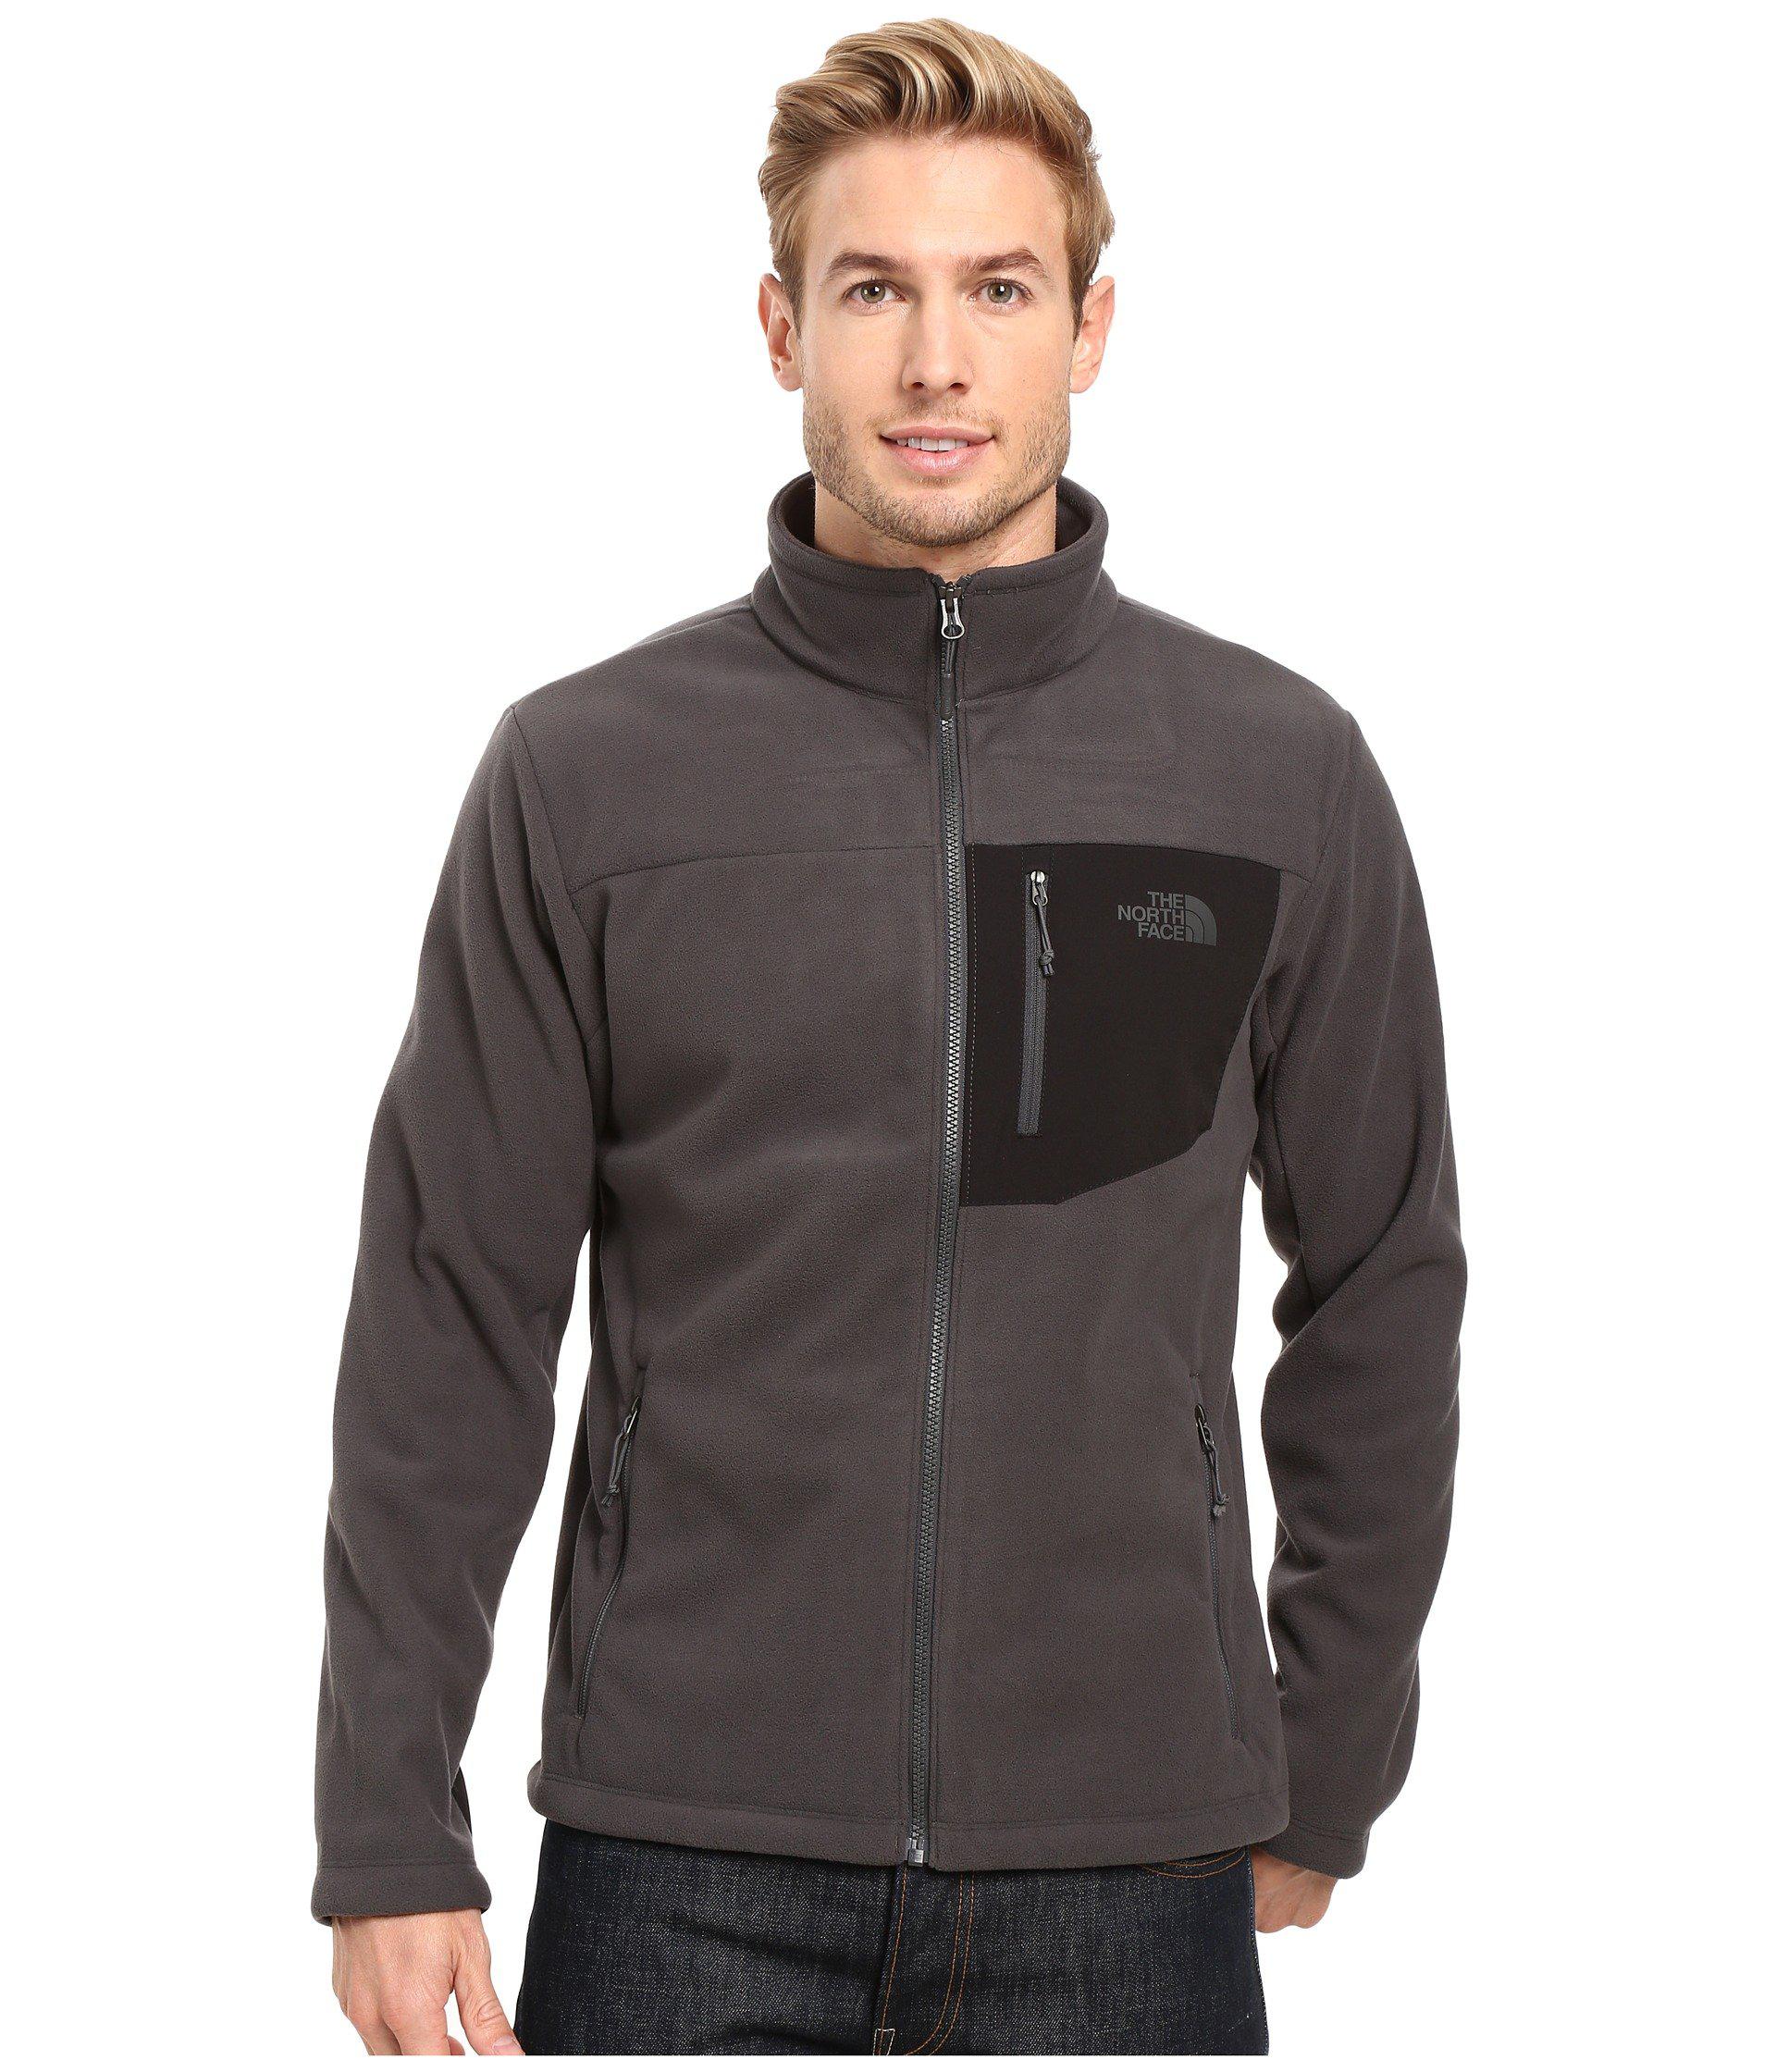 The North Face Chimborazo Full Zip Fleece in Gray for Men - Lyst